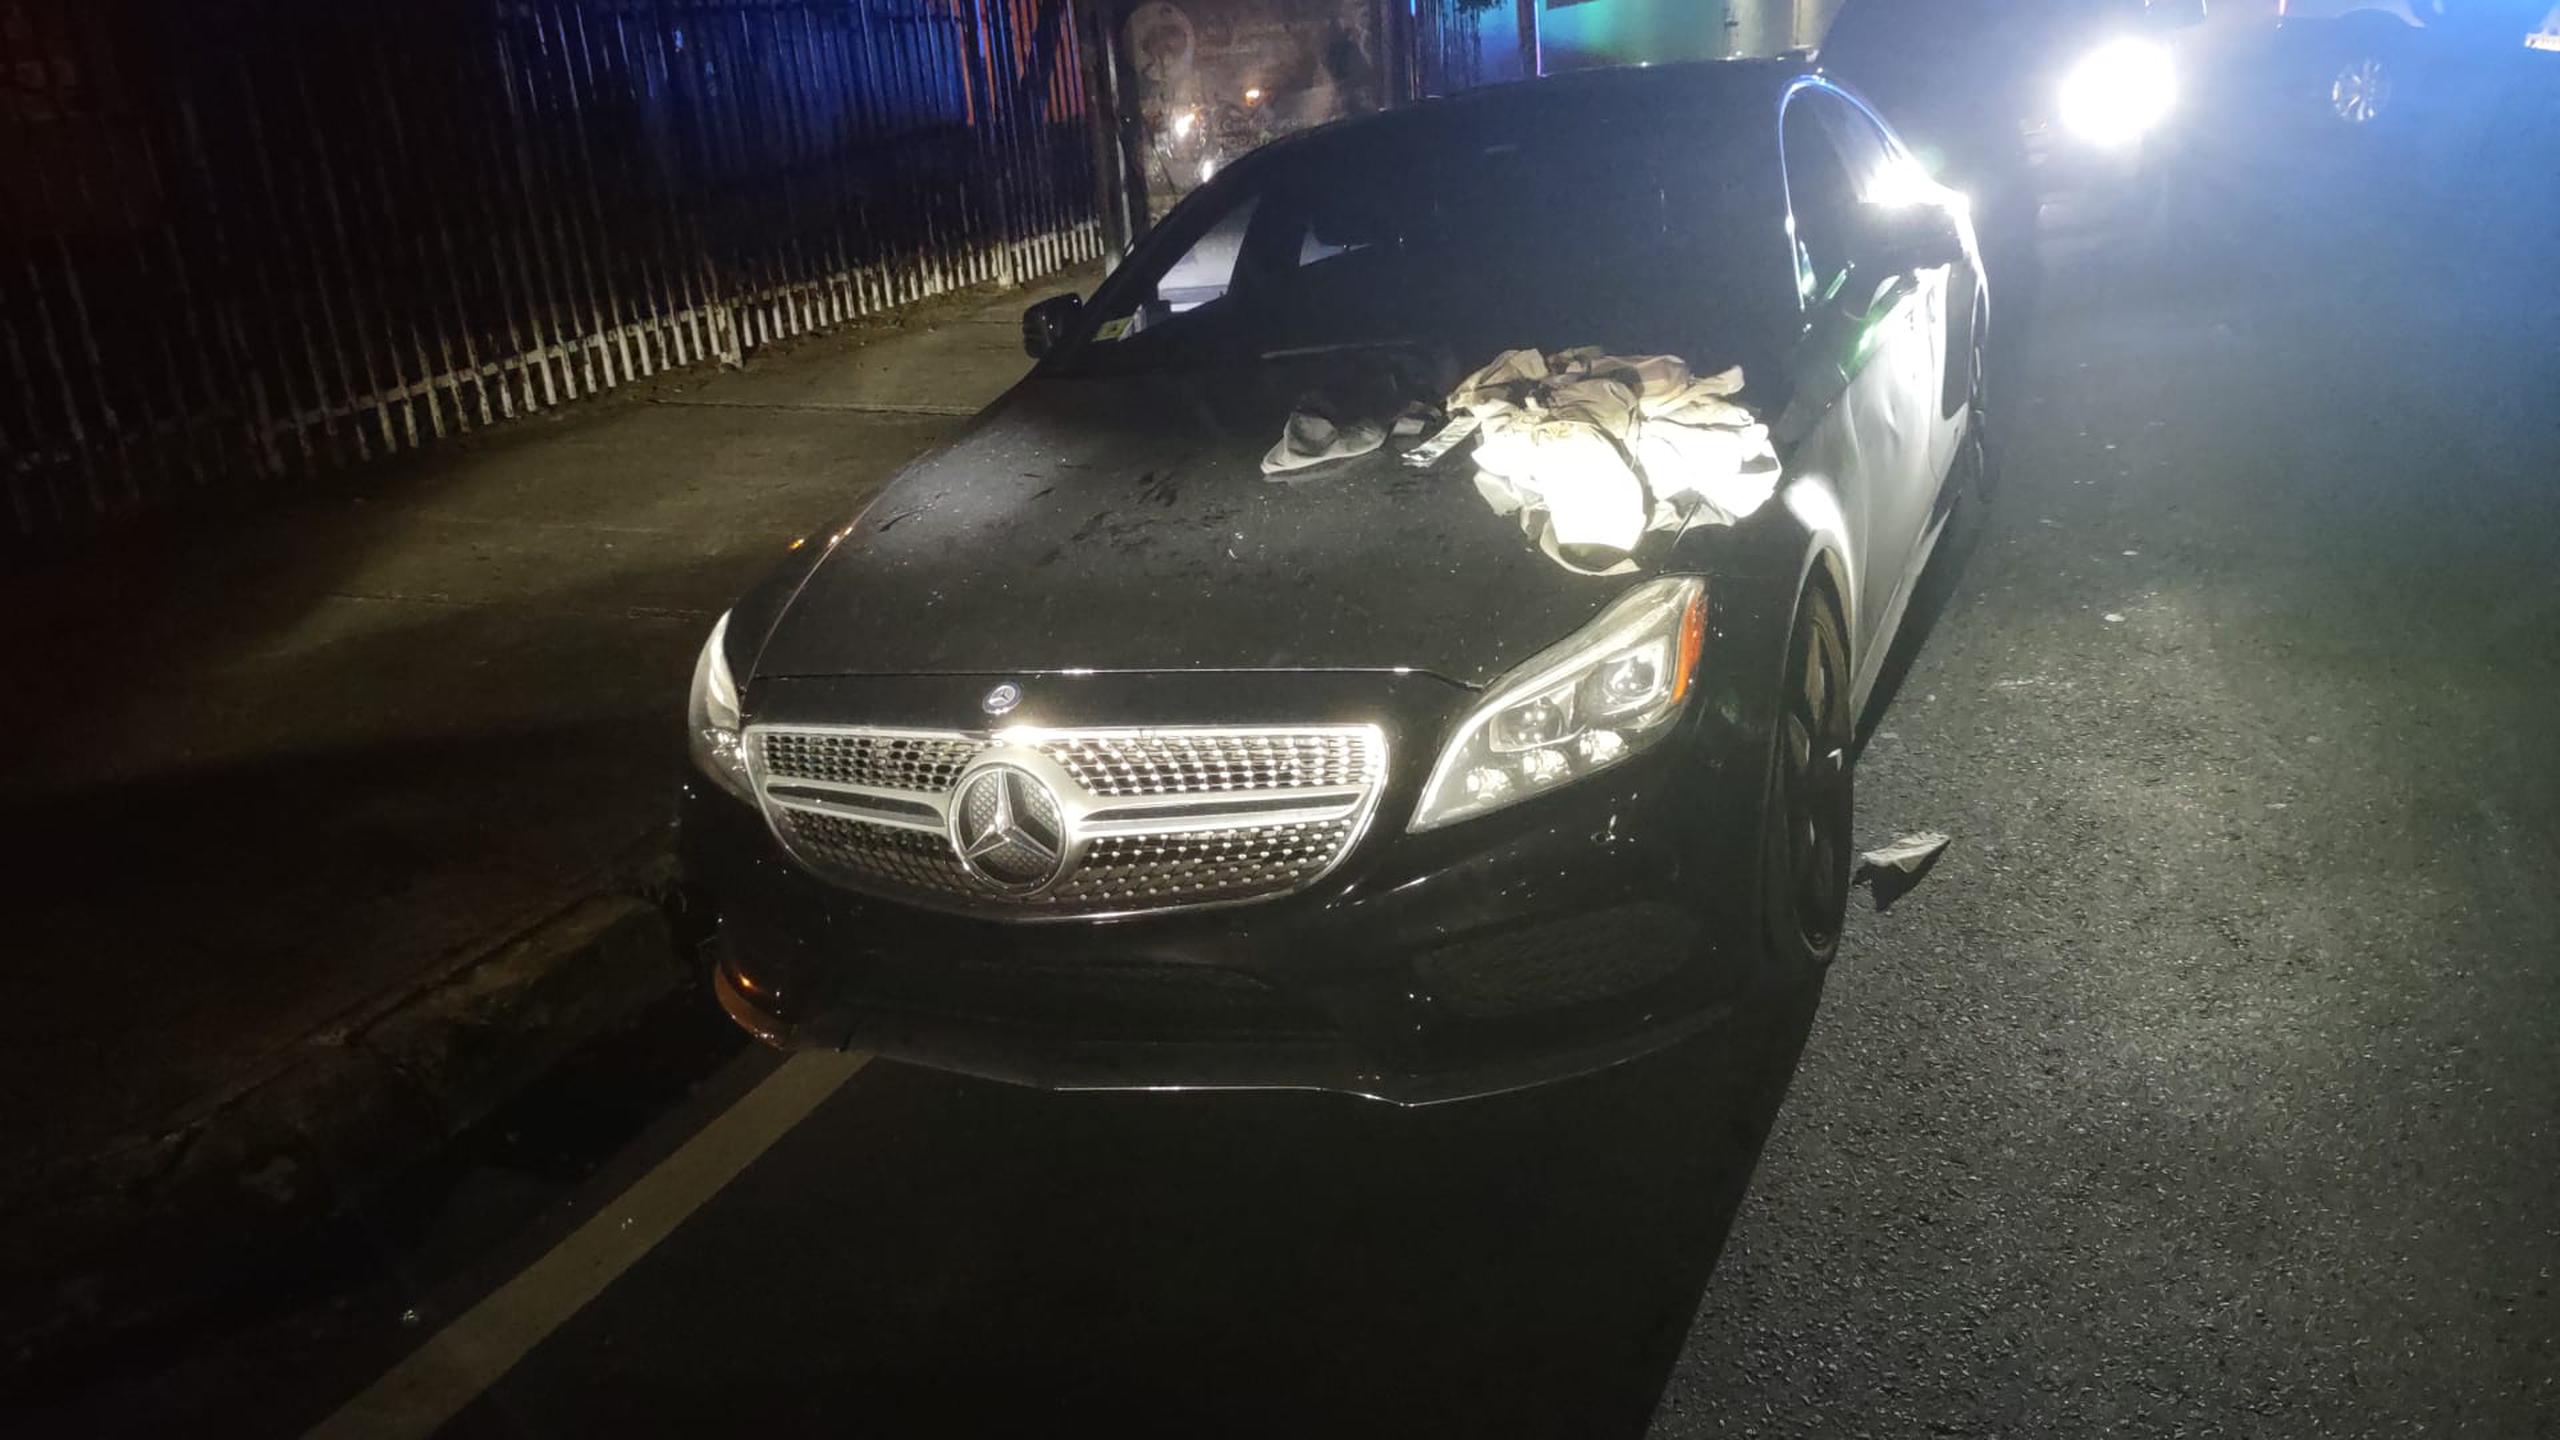 Vehículo Mercedes Benz reportado hurtado mediante "carjacking" ocupado a dos hombres en Santurce.